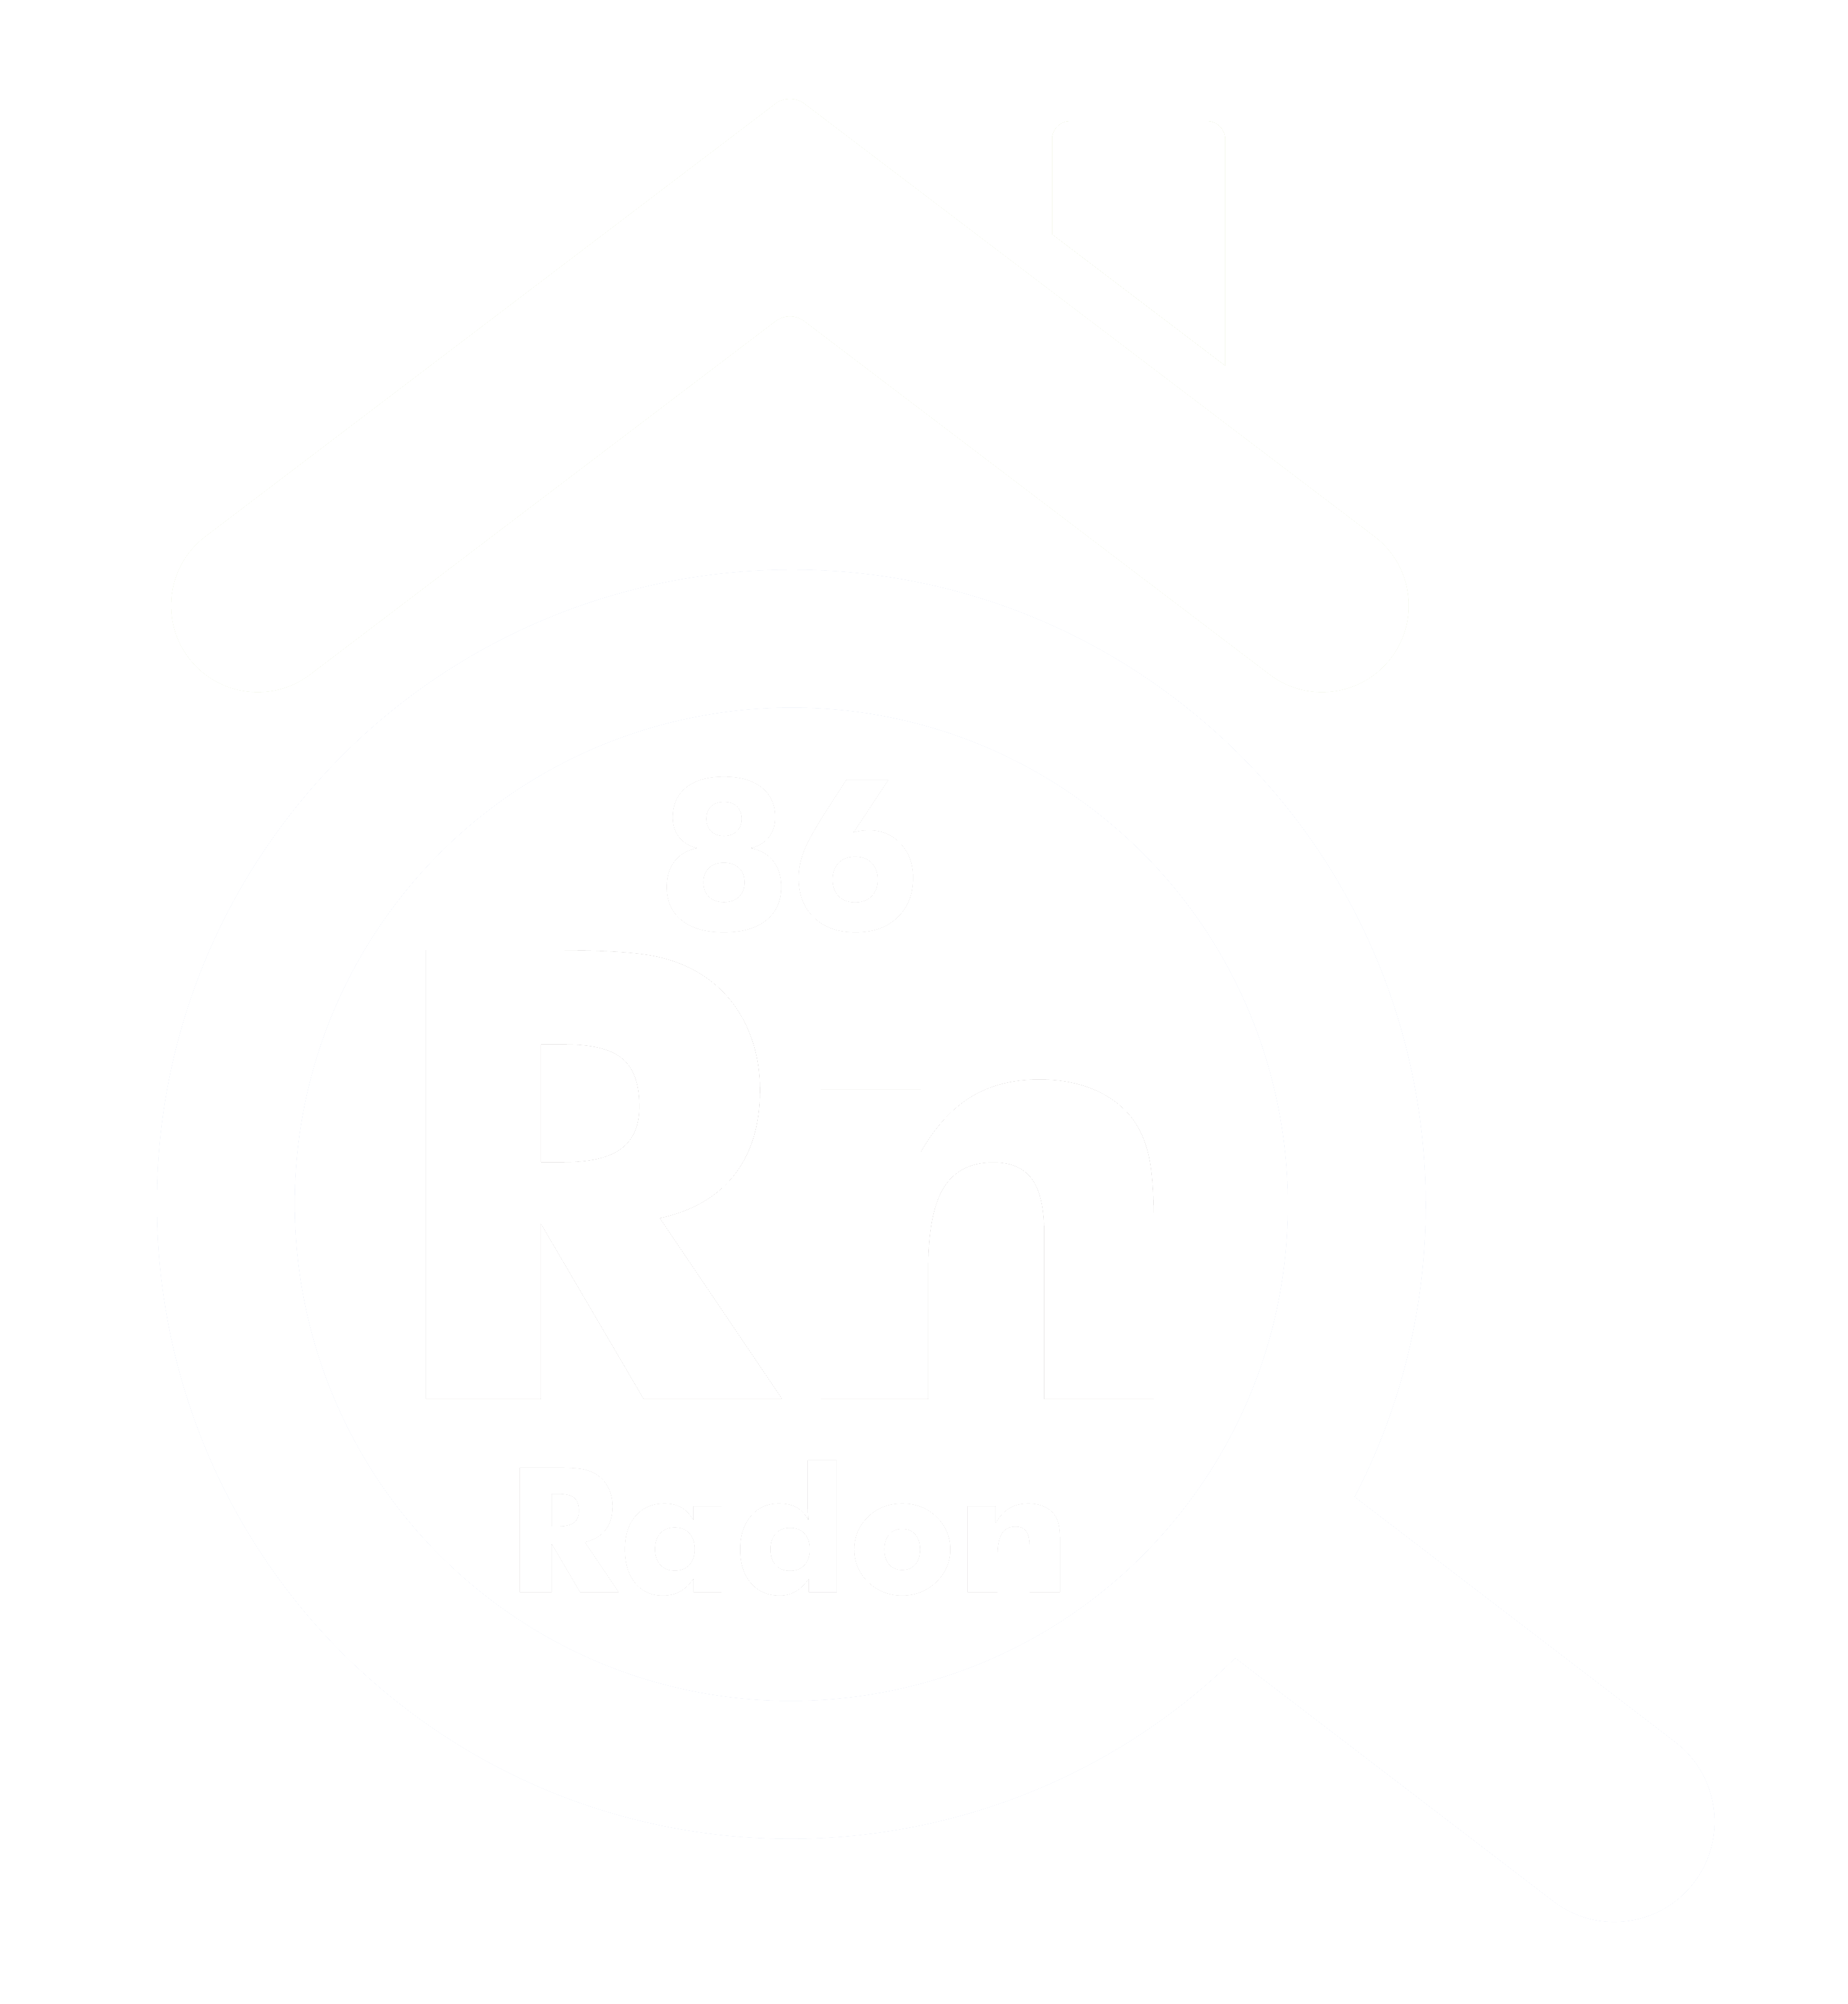 Radon Testing Services